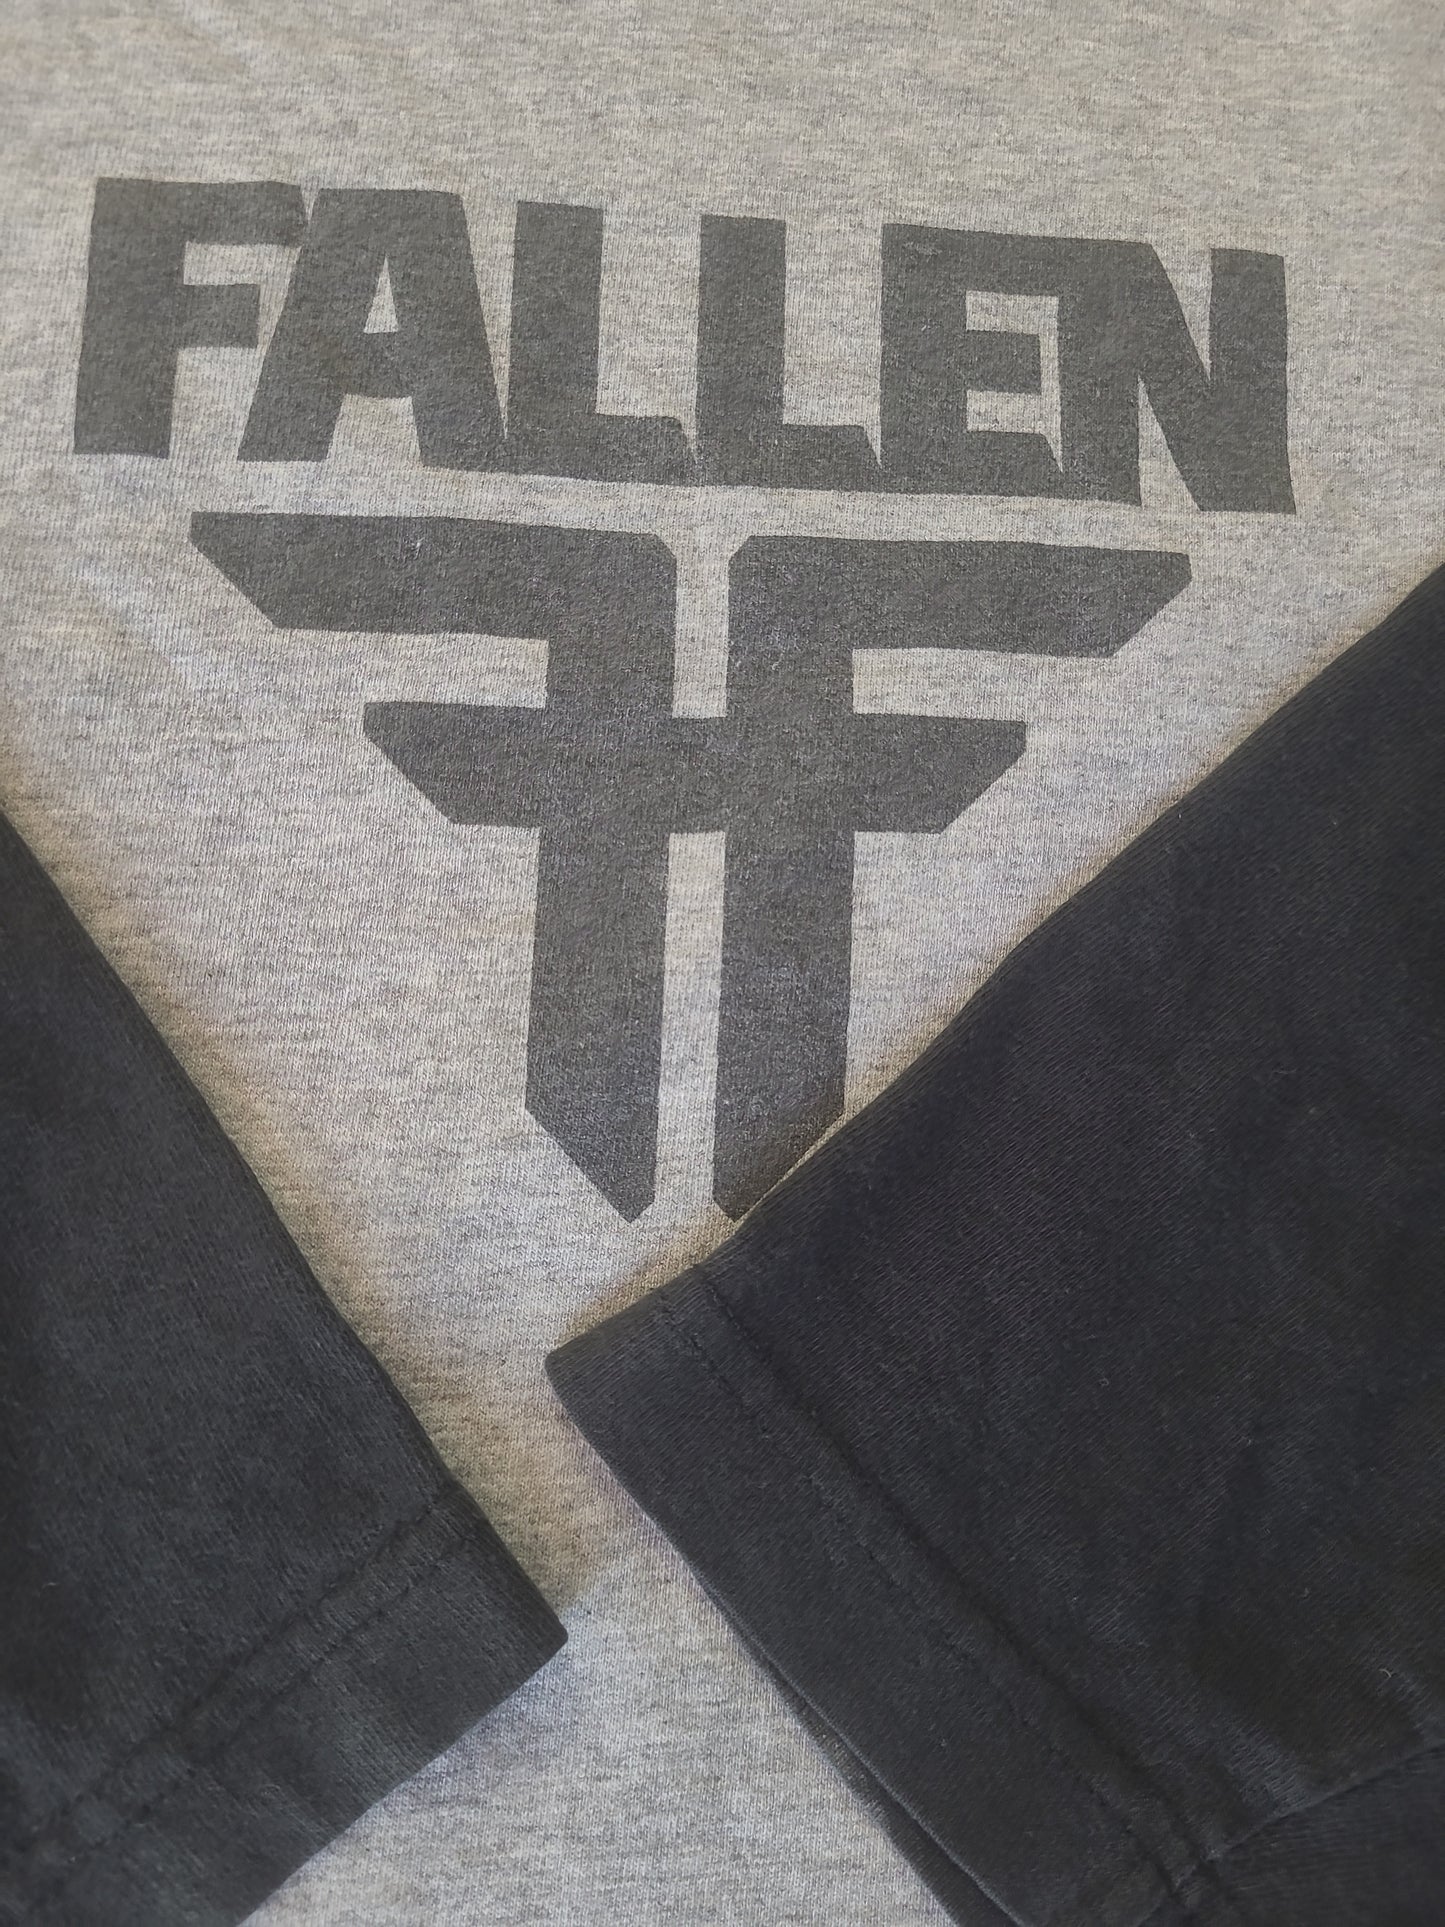 Fallen 3/4 Sleeve Tee Black - X-Large